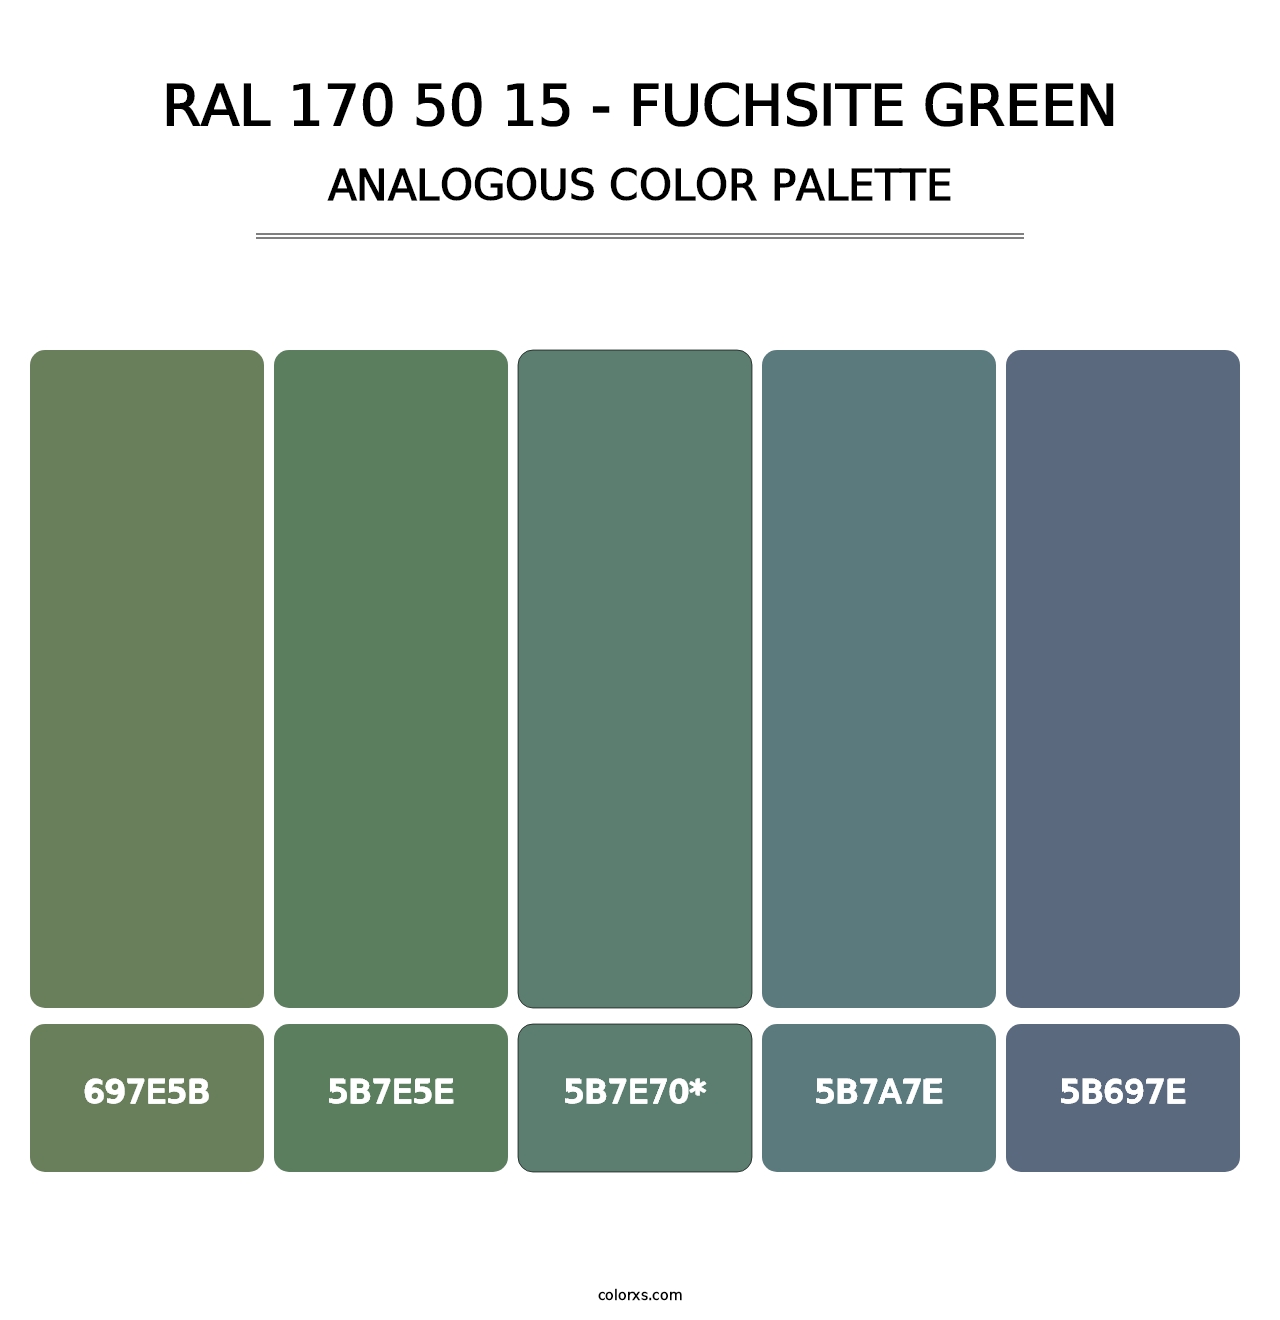 RAL 170 50 15 - Fuchsite Green - Analogous Color Palette